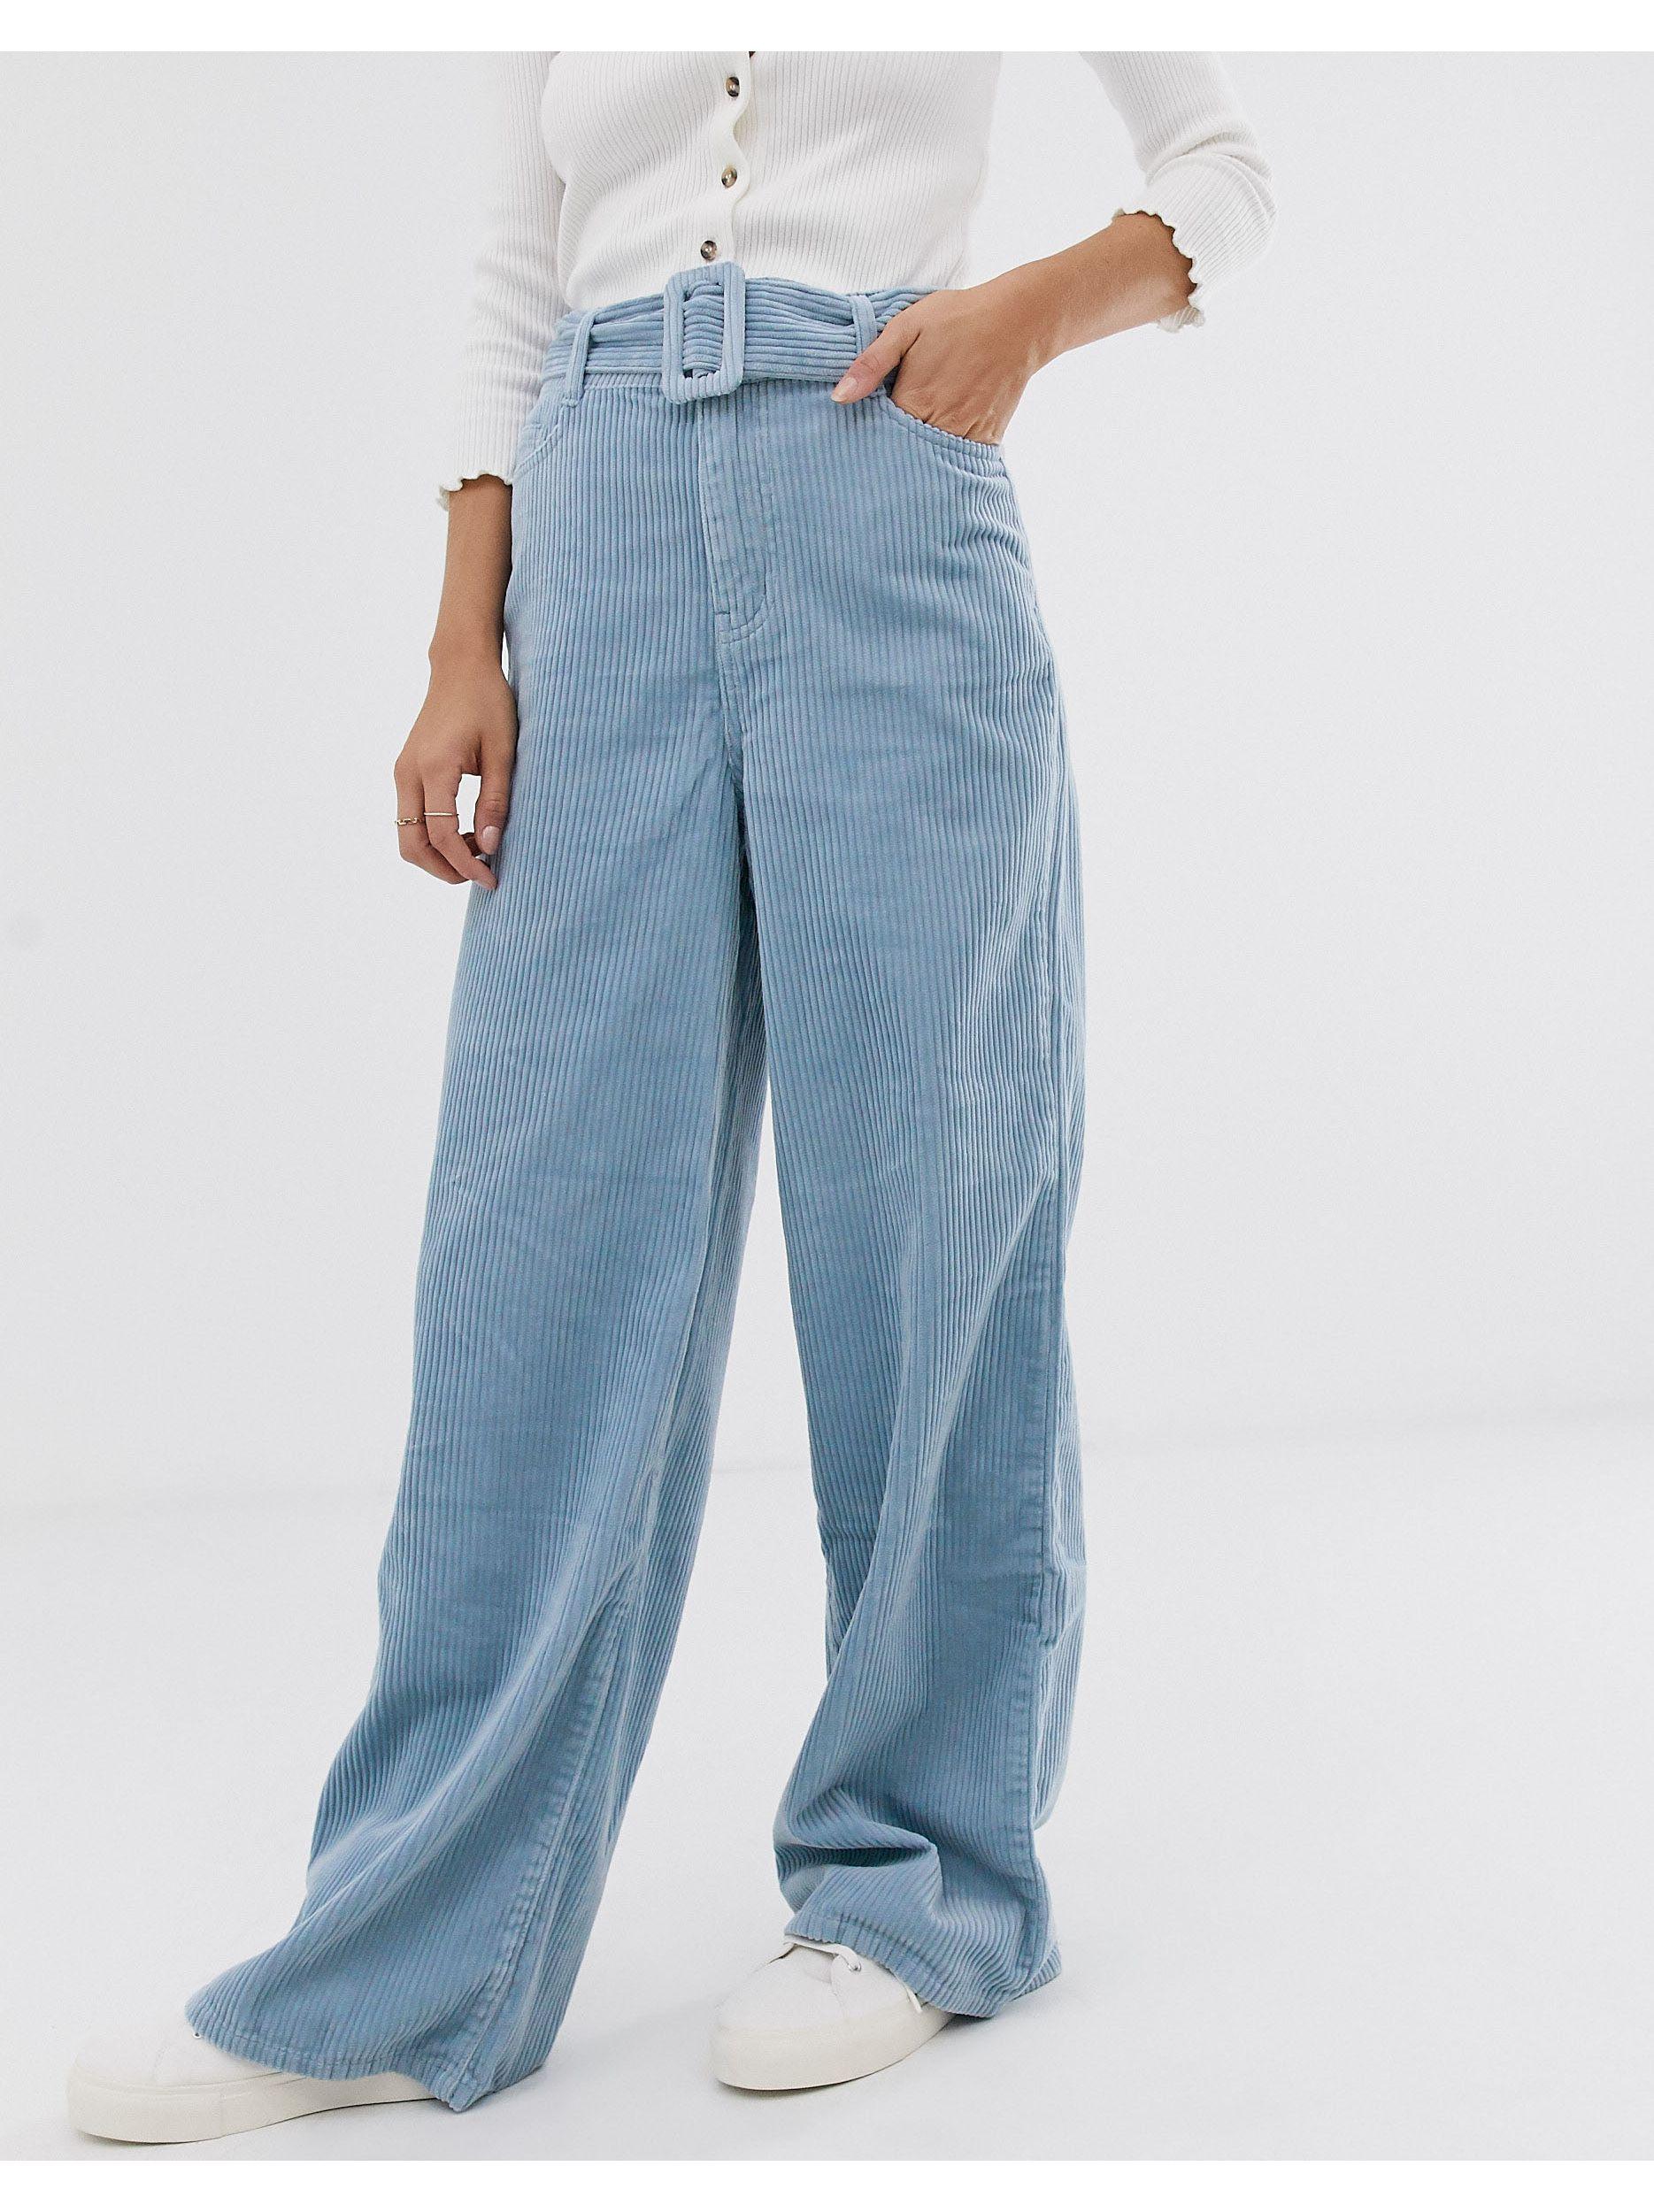 Urban Bliss Denim Cord Wide Leg Trousers With Self Belt Detail in Blue -  Lyst